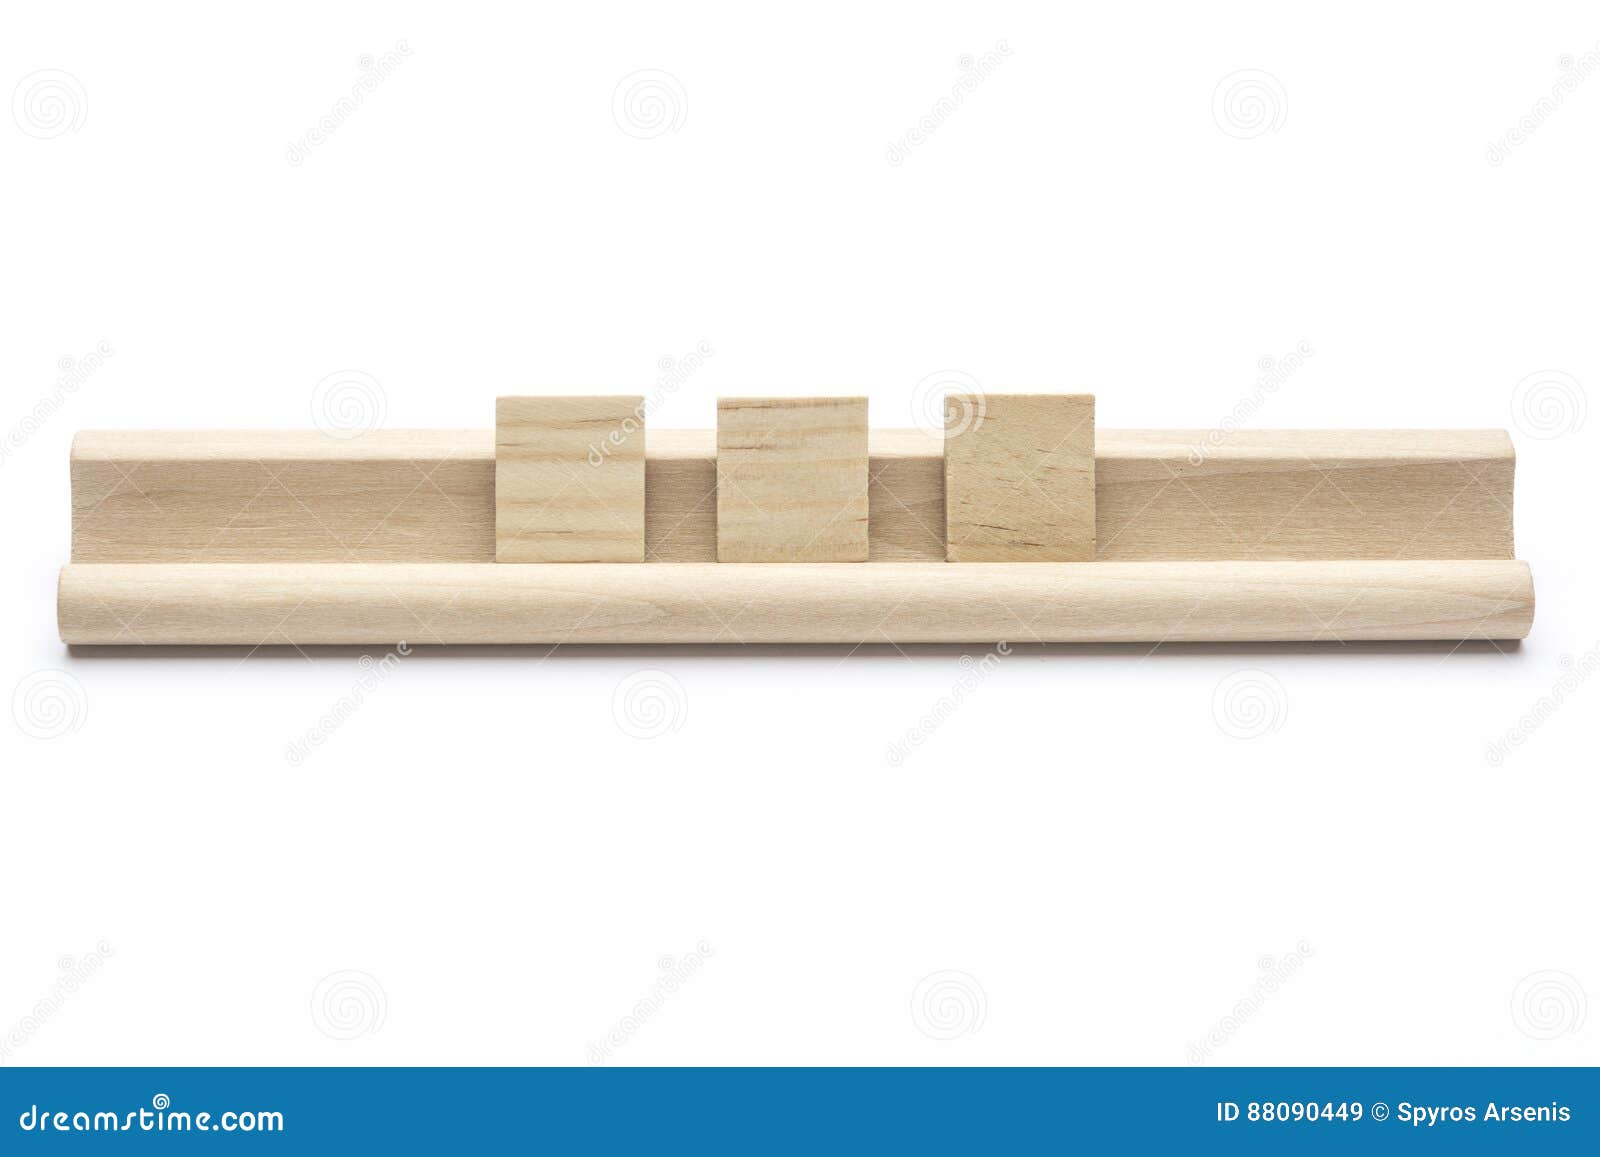 three blank scrabble tiles on a wooden rack